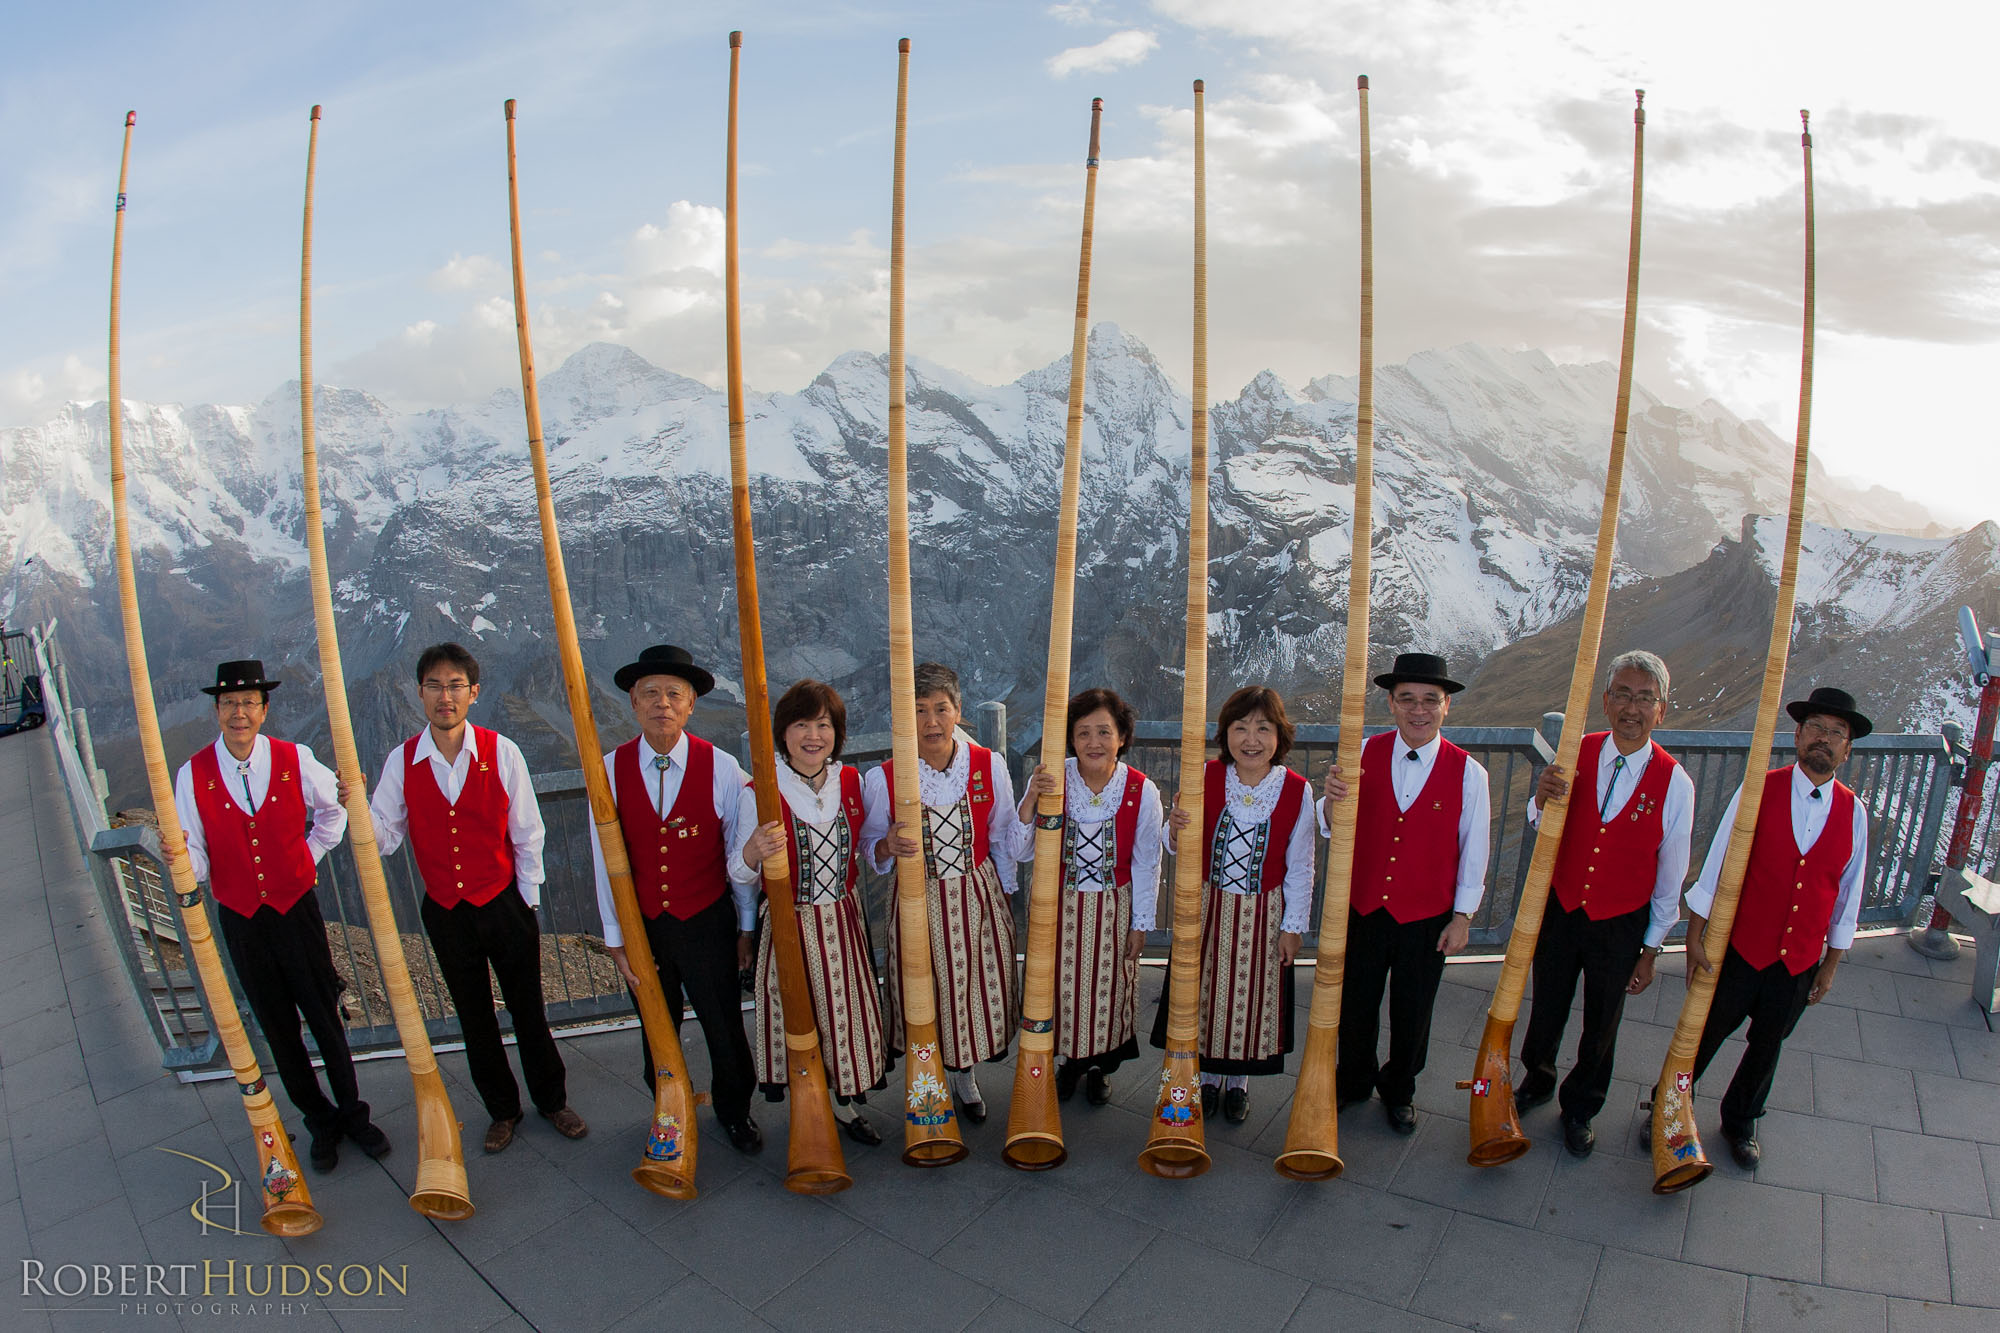 Members of the Japan's Tamagawa Alphorn Club - Shilthorn, Switzerland